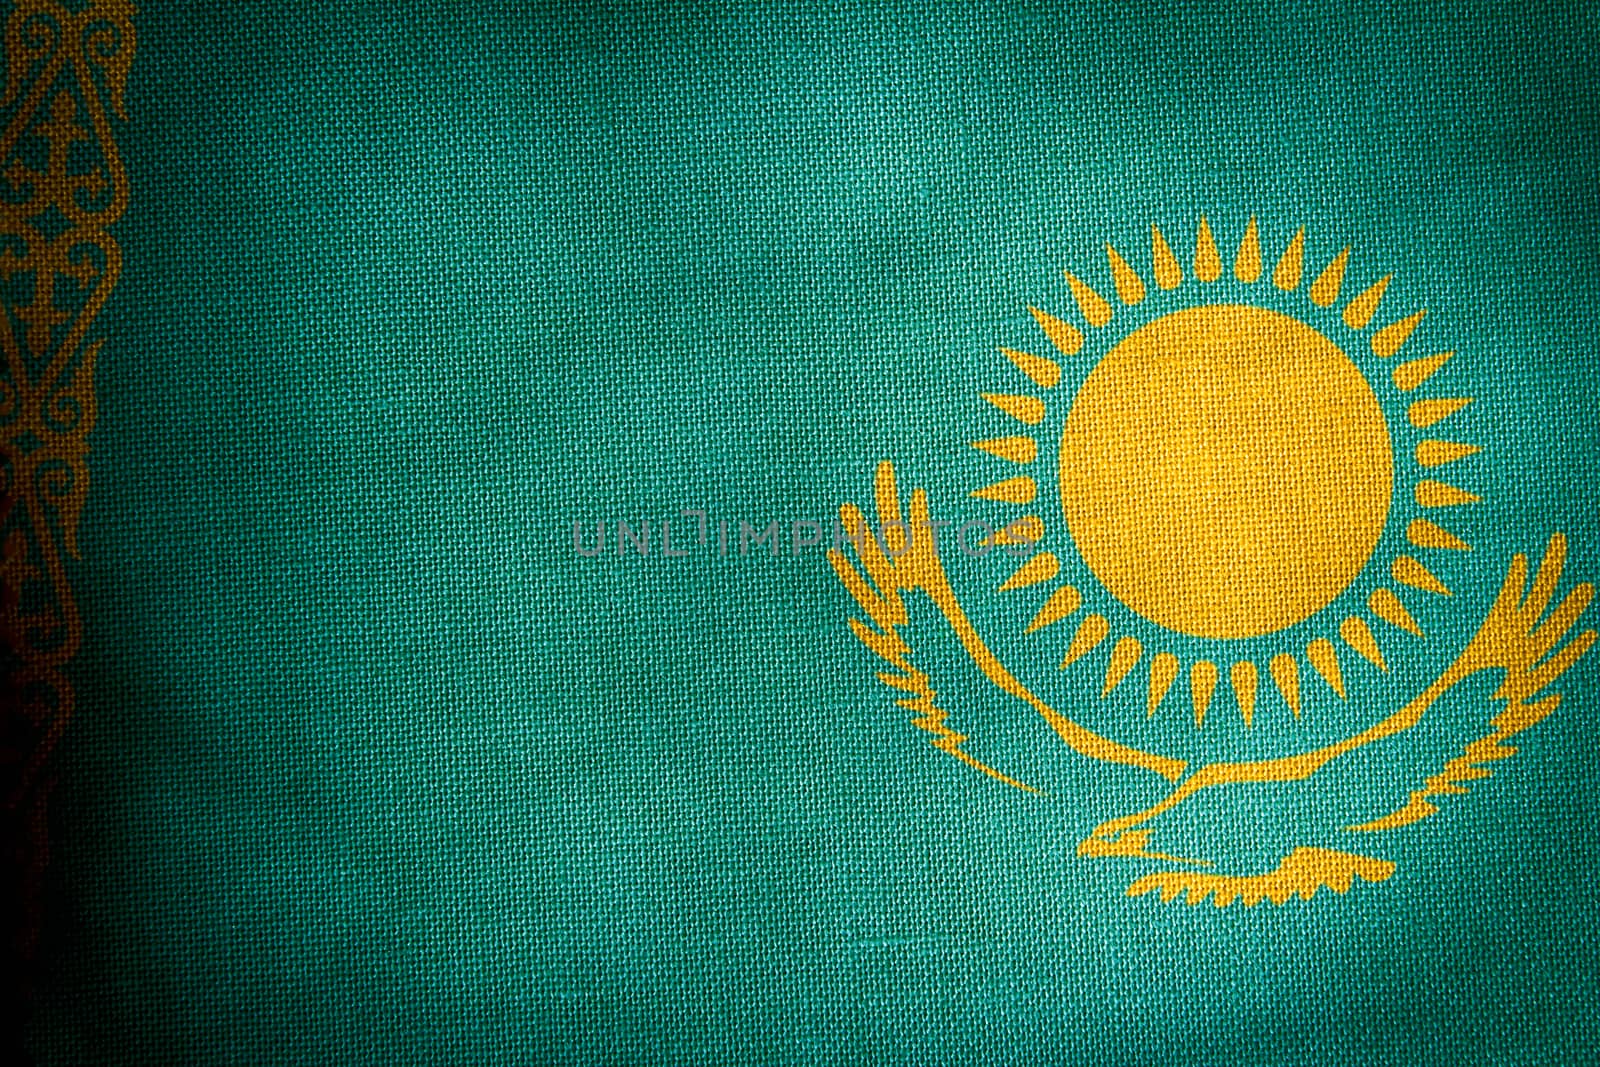 Central part flag of Kazakhstan by VIPDesignUSA